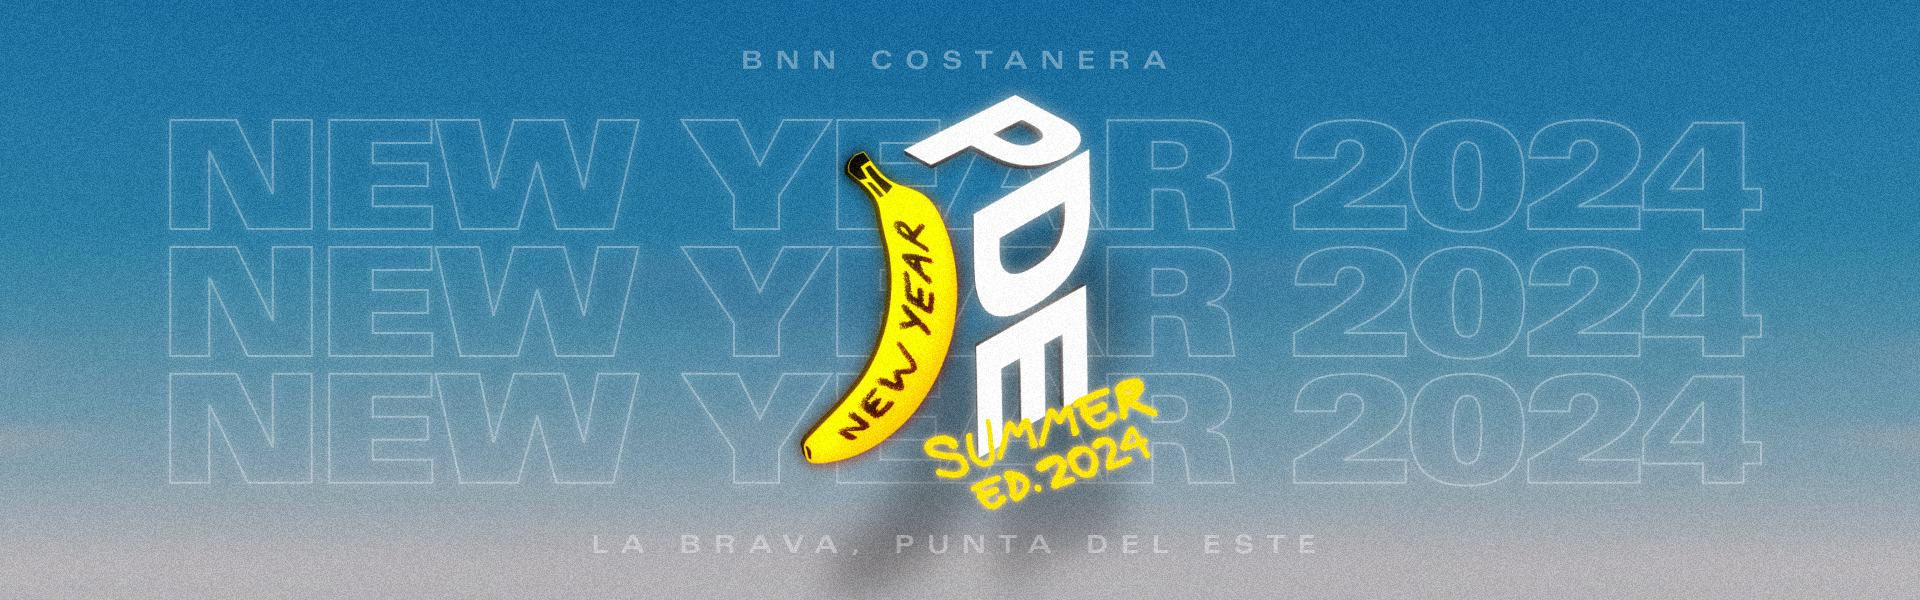 Flyer BNN NEW YEAR 2024 - EDICION PUNTA DEL ESTE